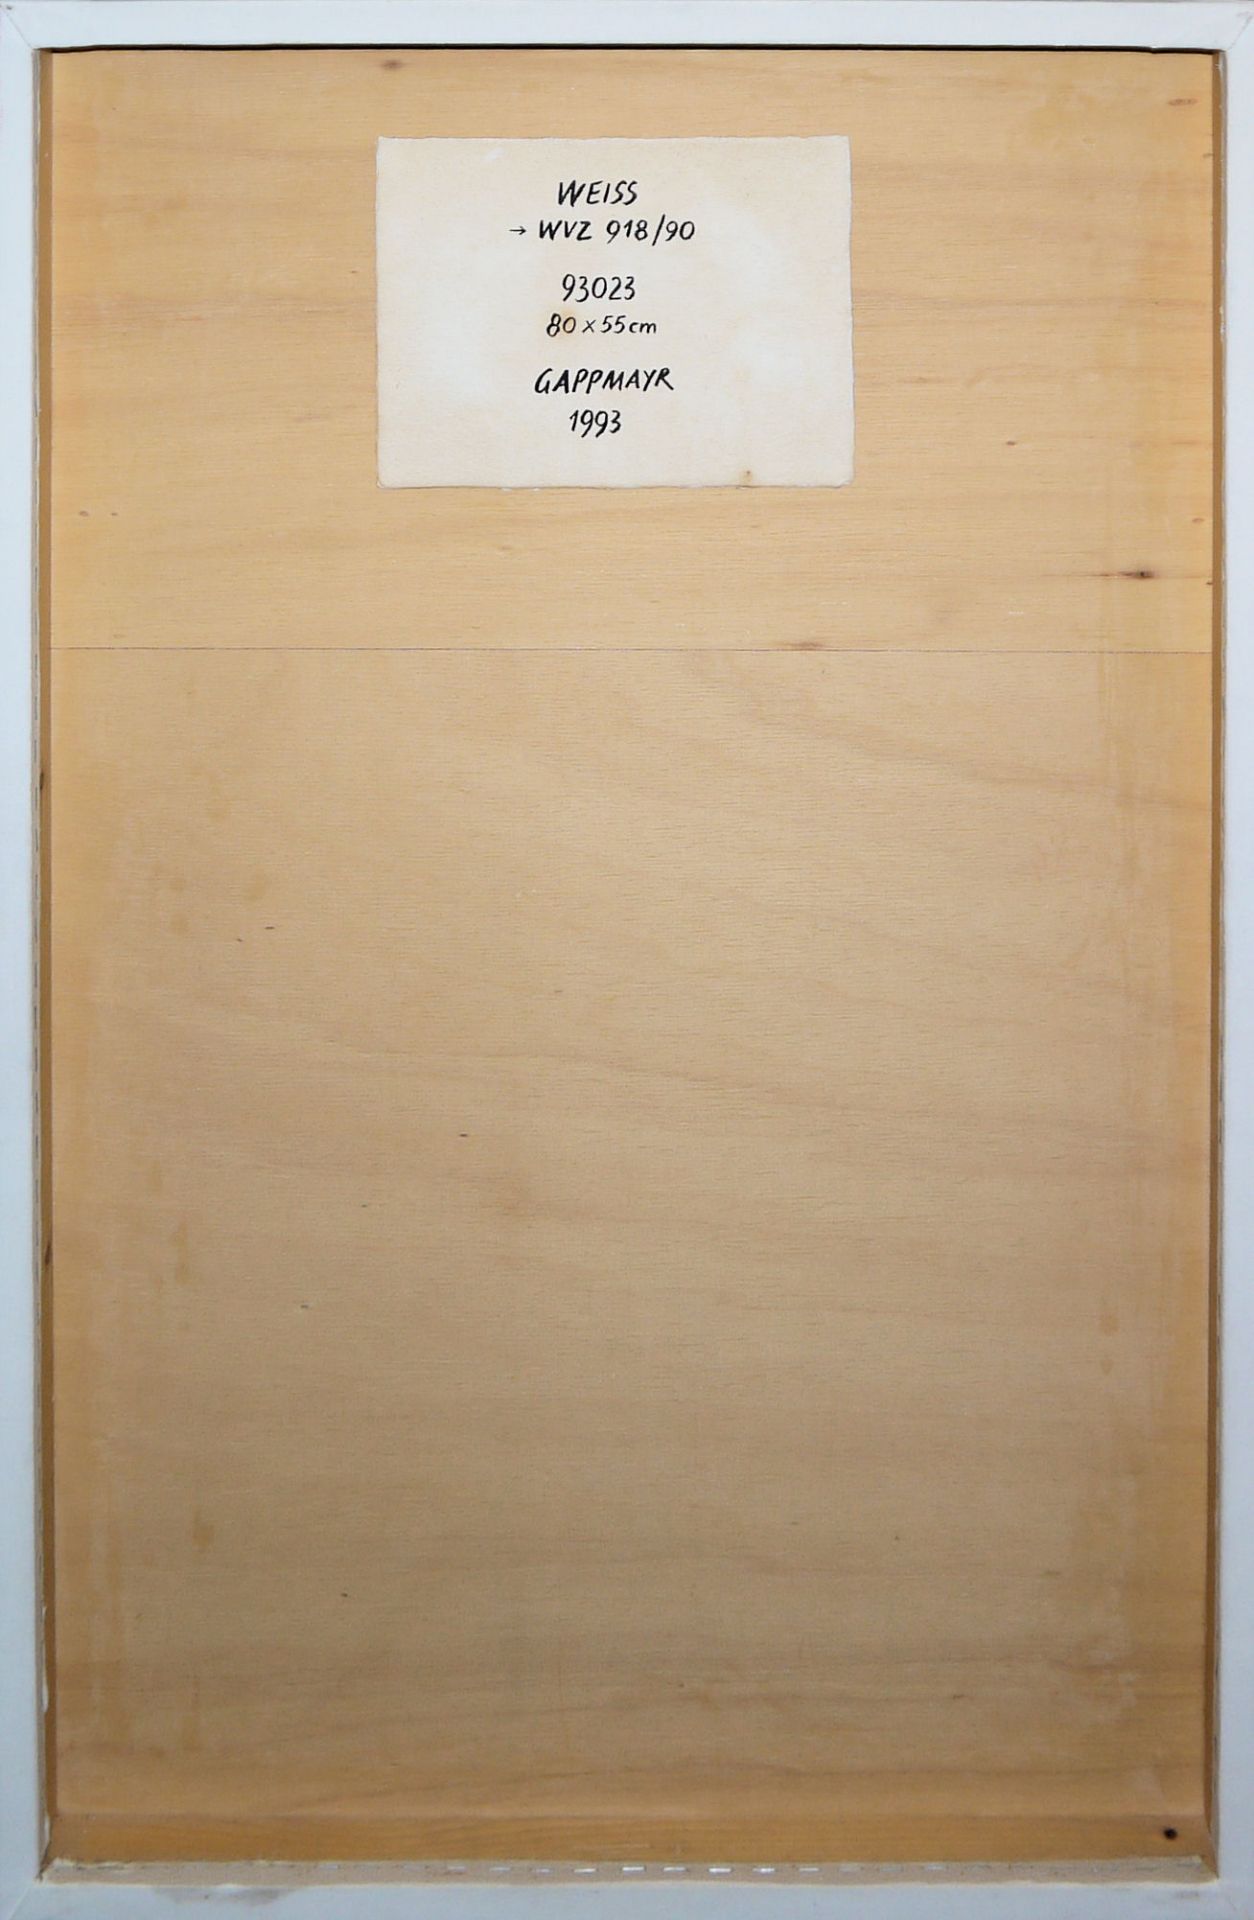 Heinz Gappmayr, "Weiss", Aquatec (WVZ 918/90), with sign. Catalogue "Modifications" & monograph "Da - Image 2 of 3